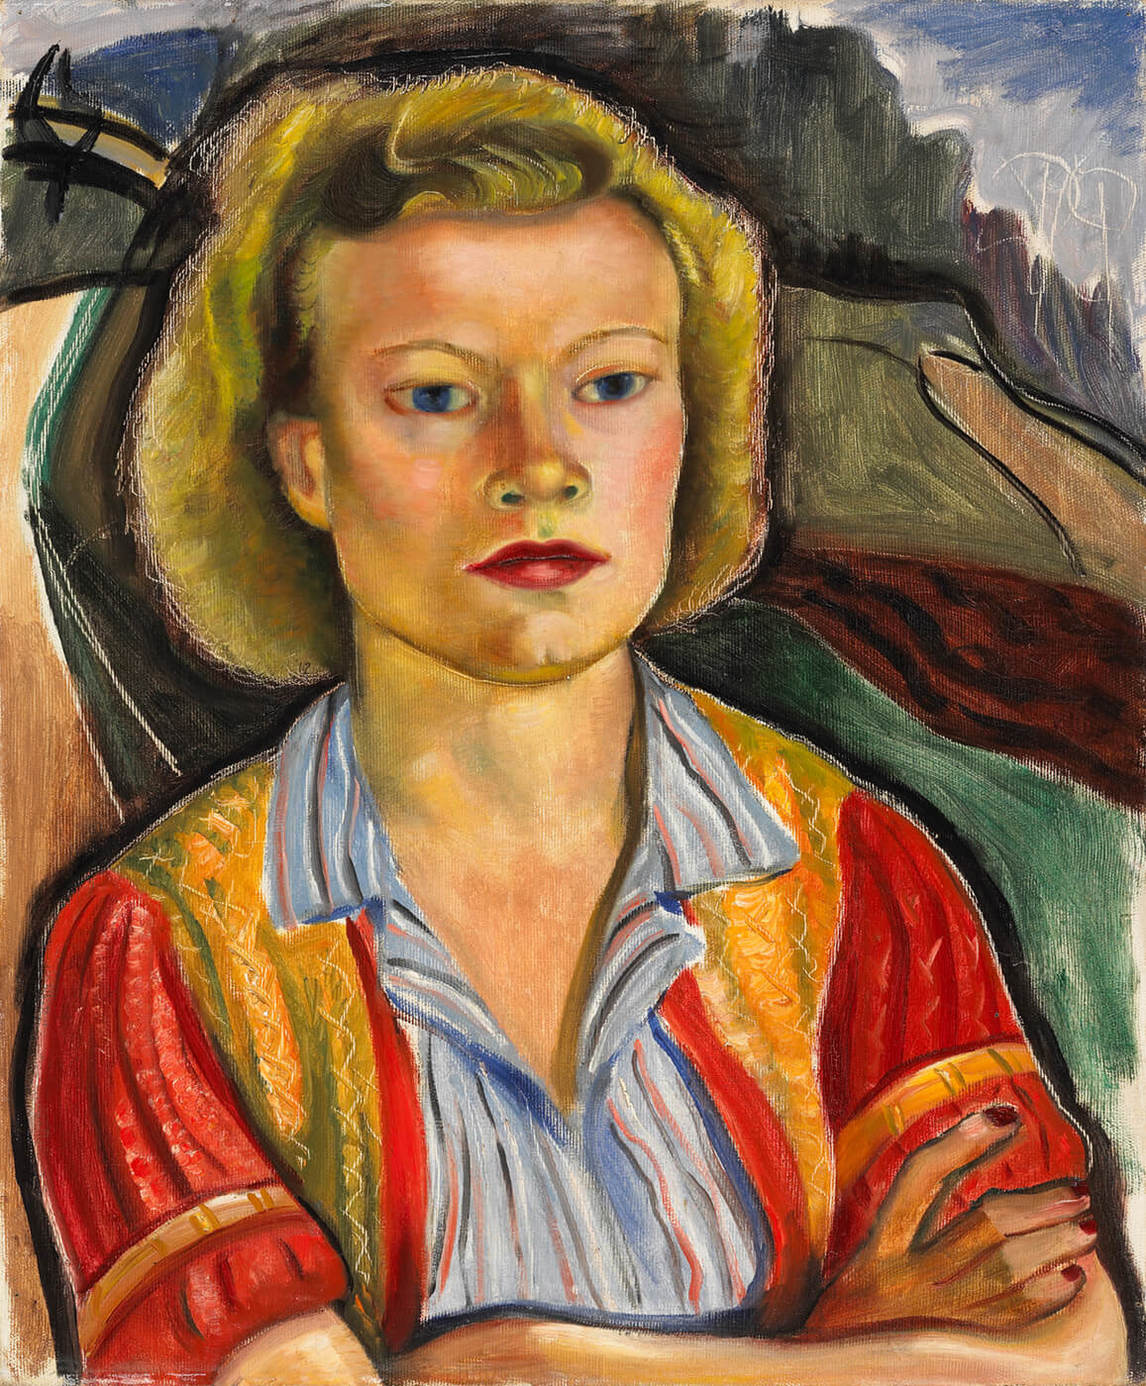 Art Canada Institute, Prudence Heward, Farmer's Daughter, 1945